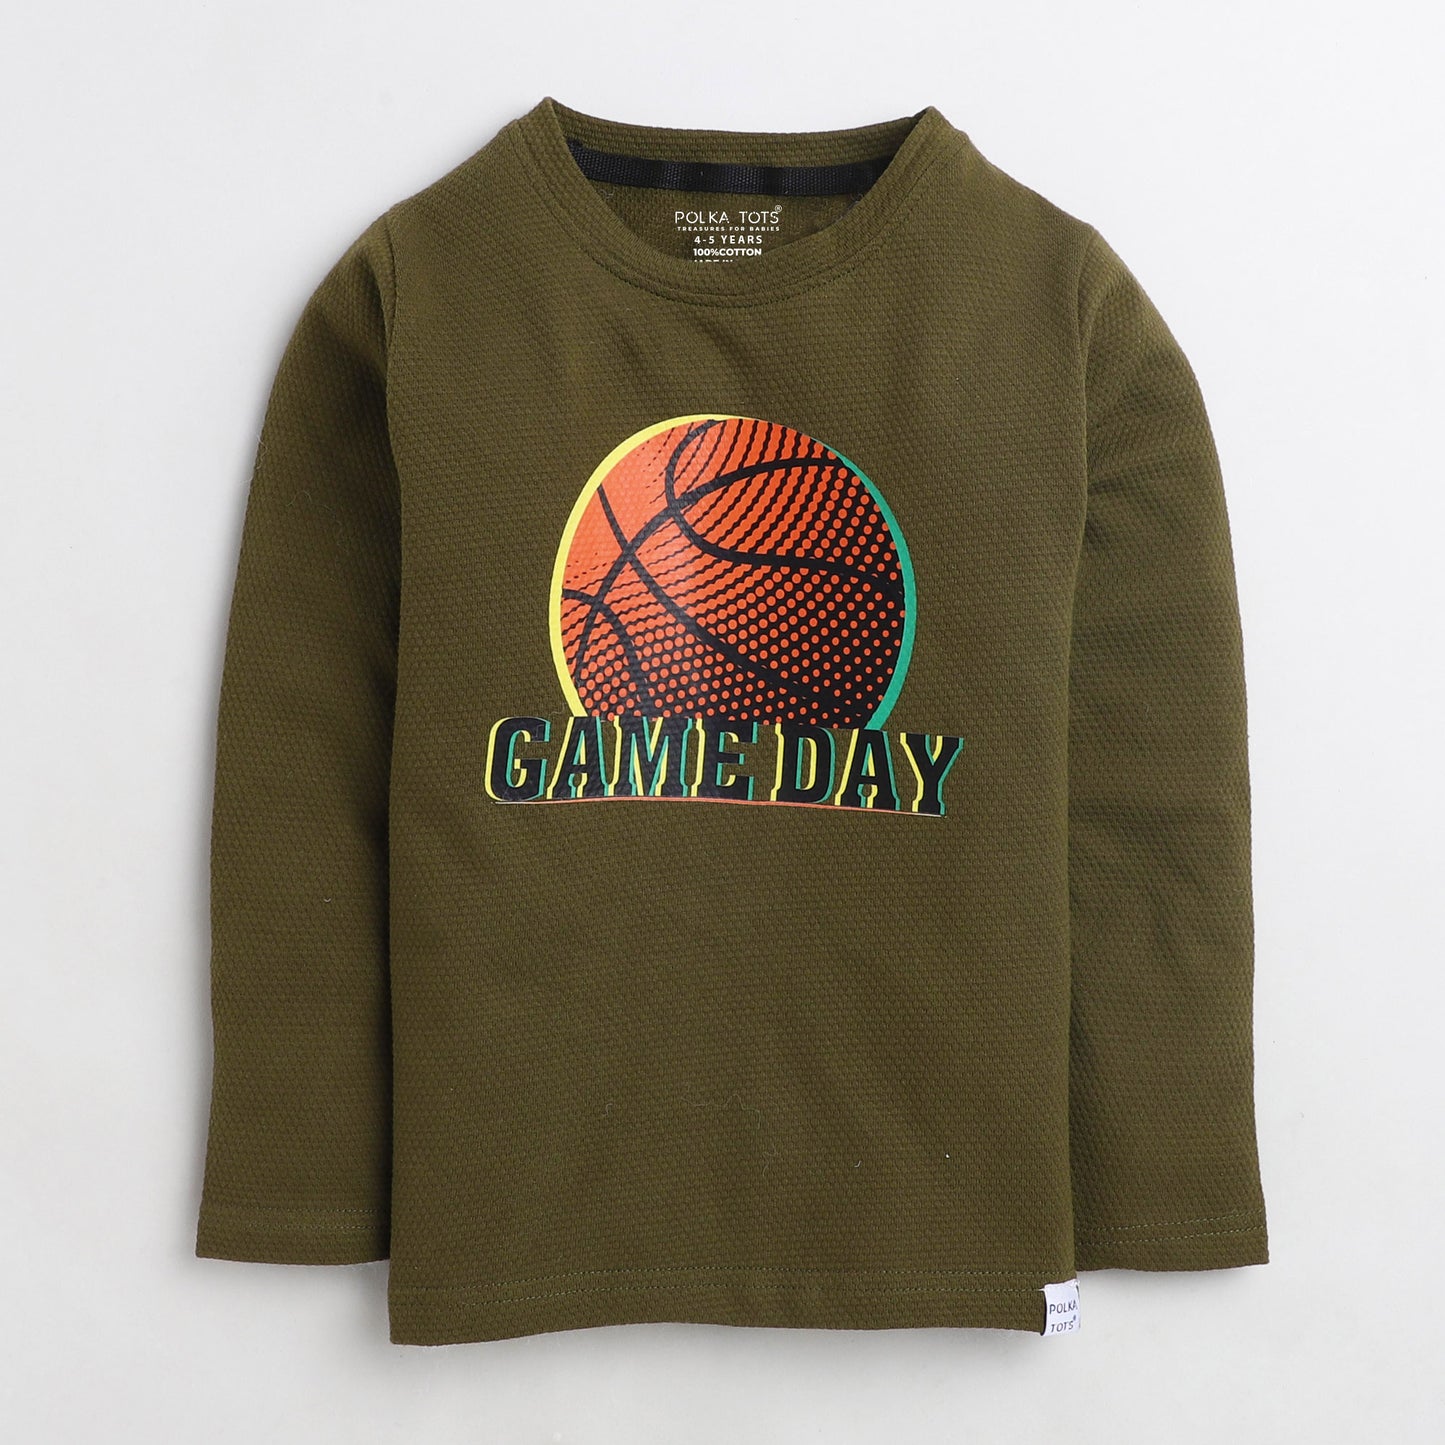 Polka Tots Full Sleeves Game Day Print Tshirt - Green